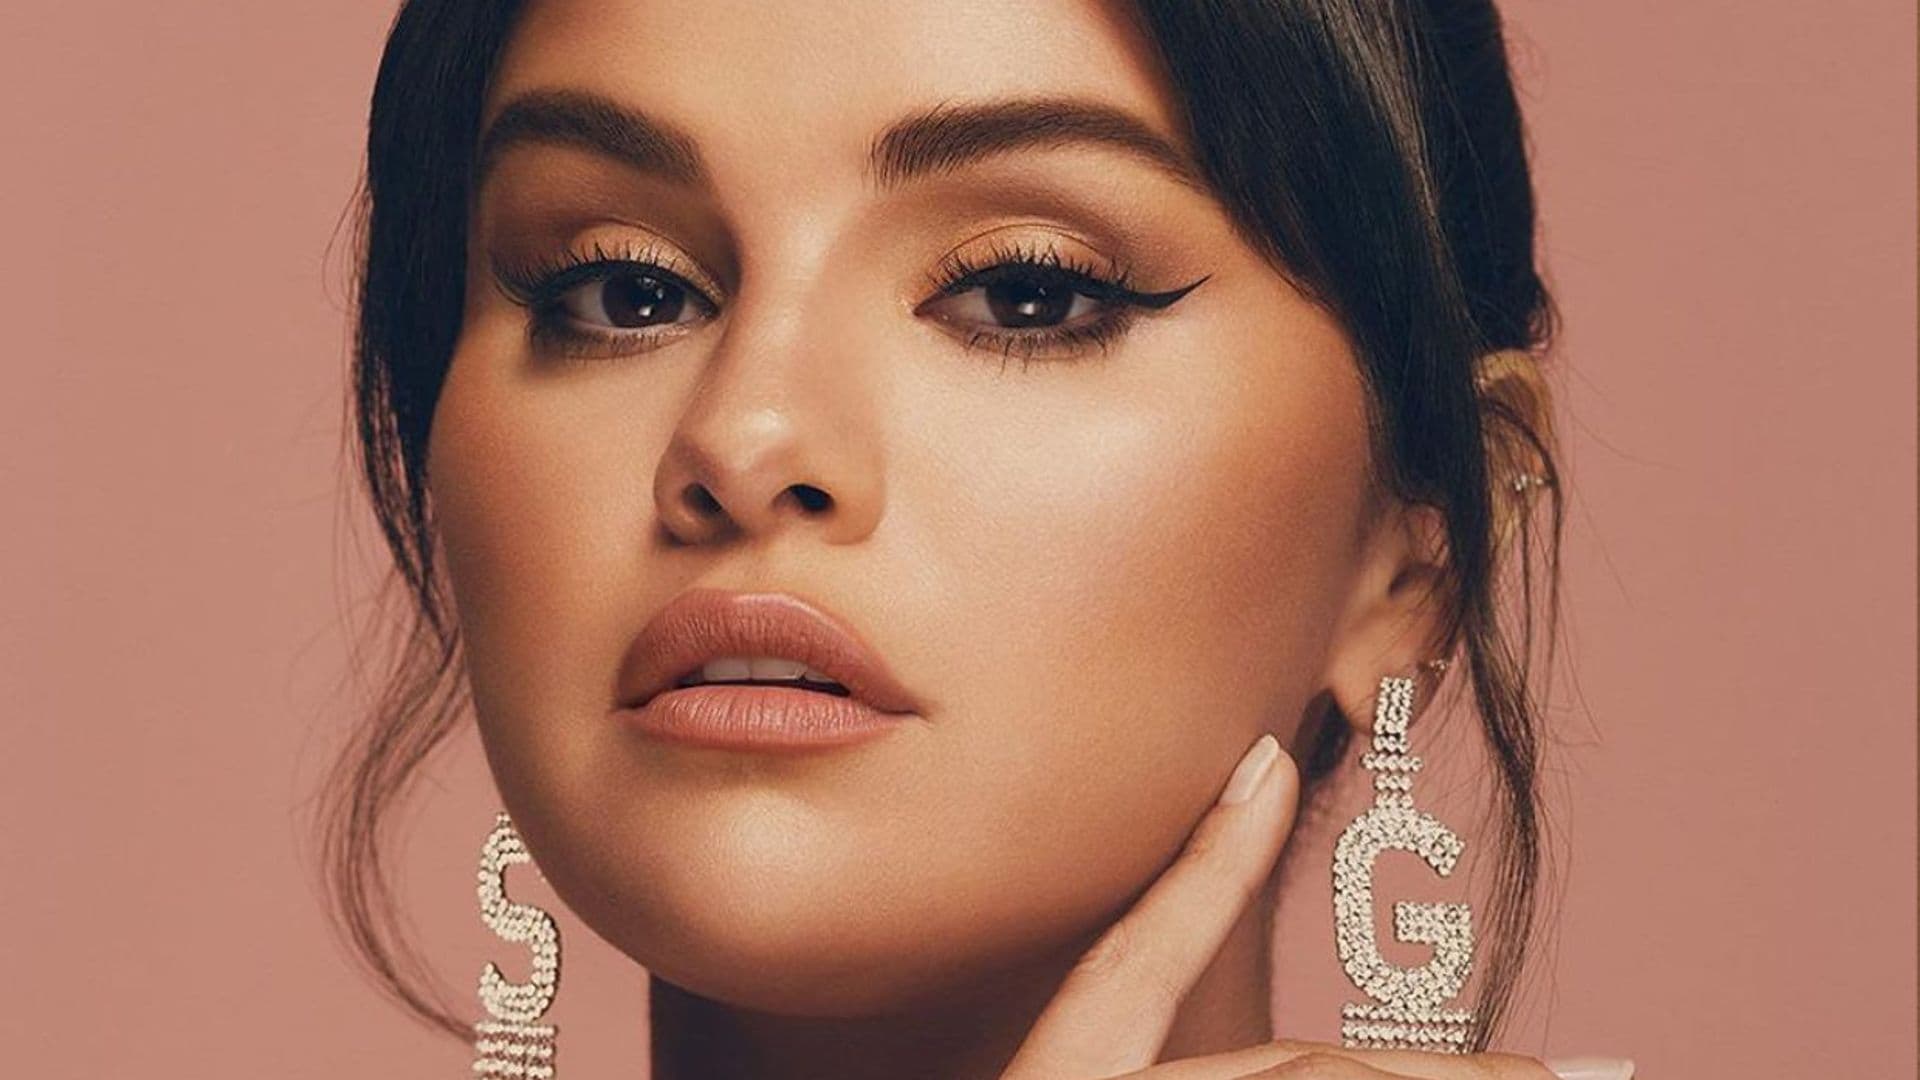 Selena Gomez revela la técnica para conseguir el 'contouring' perfecto